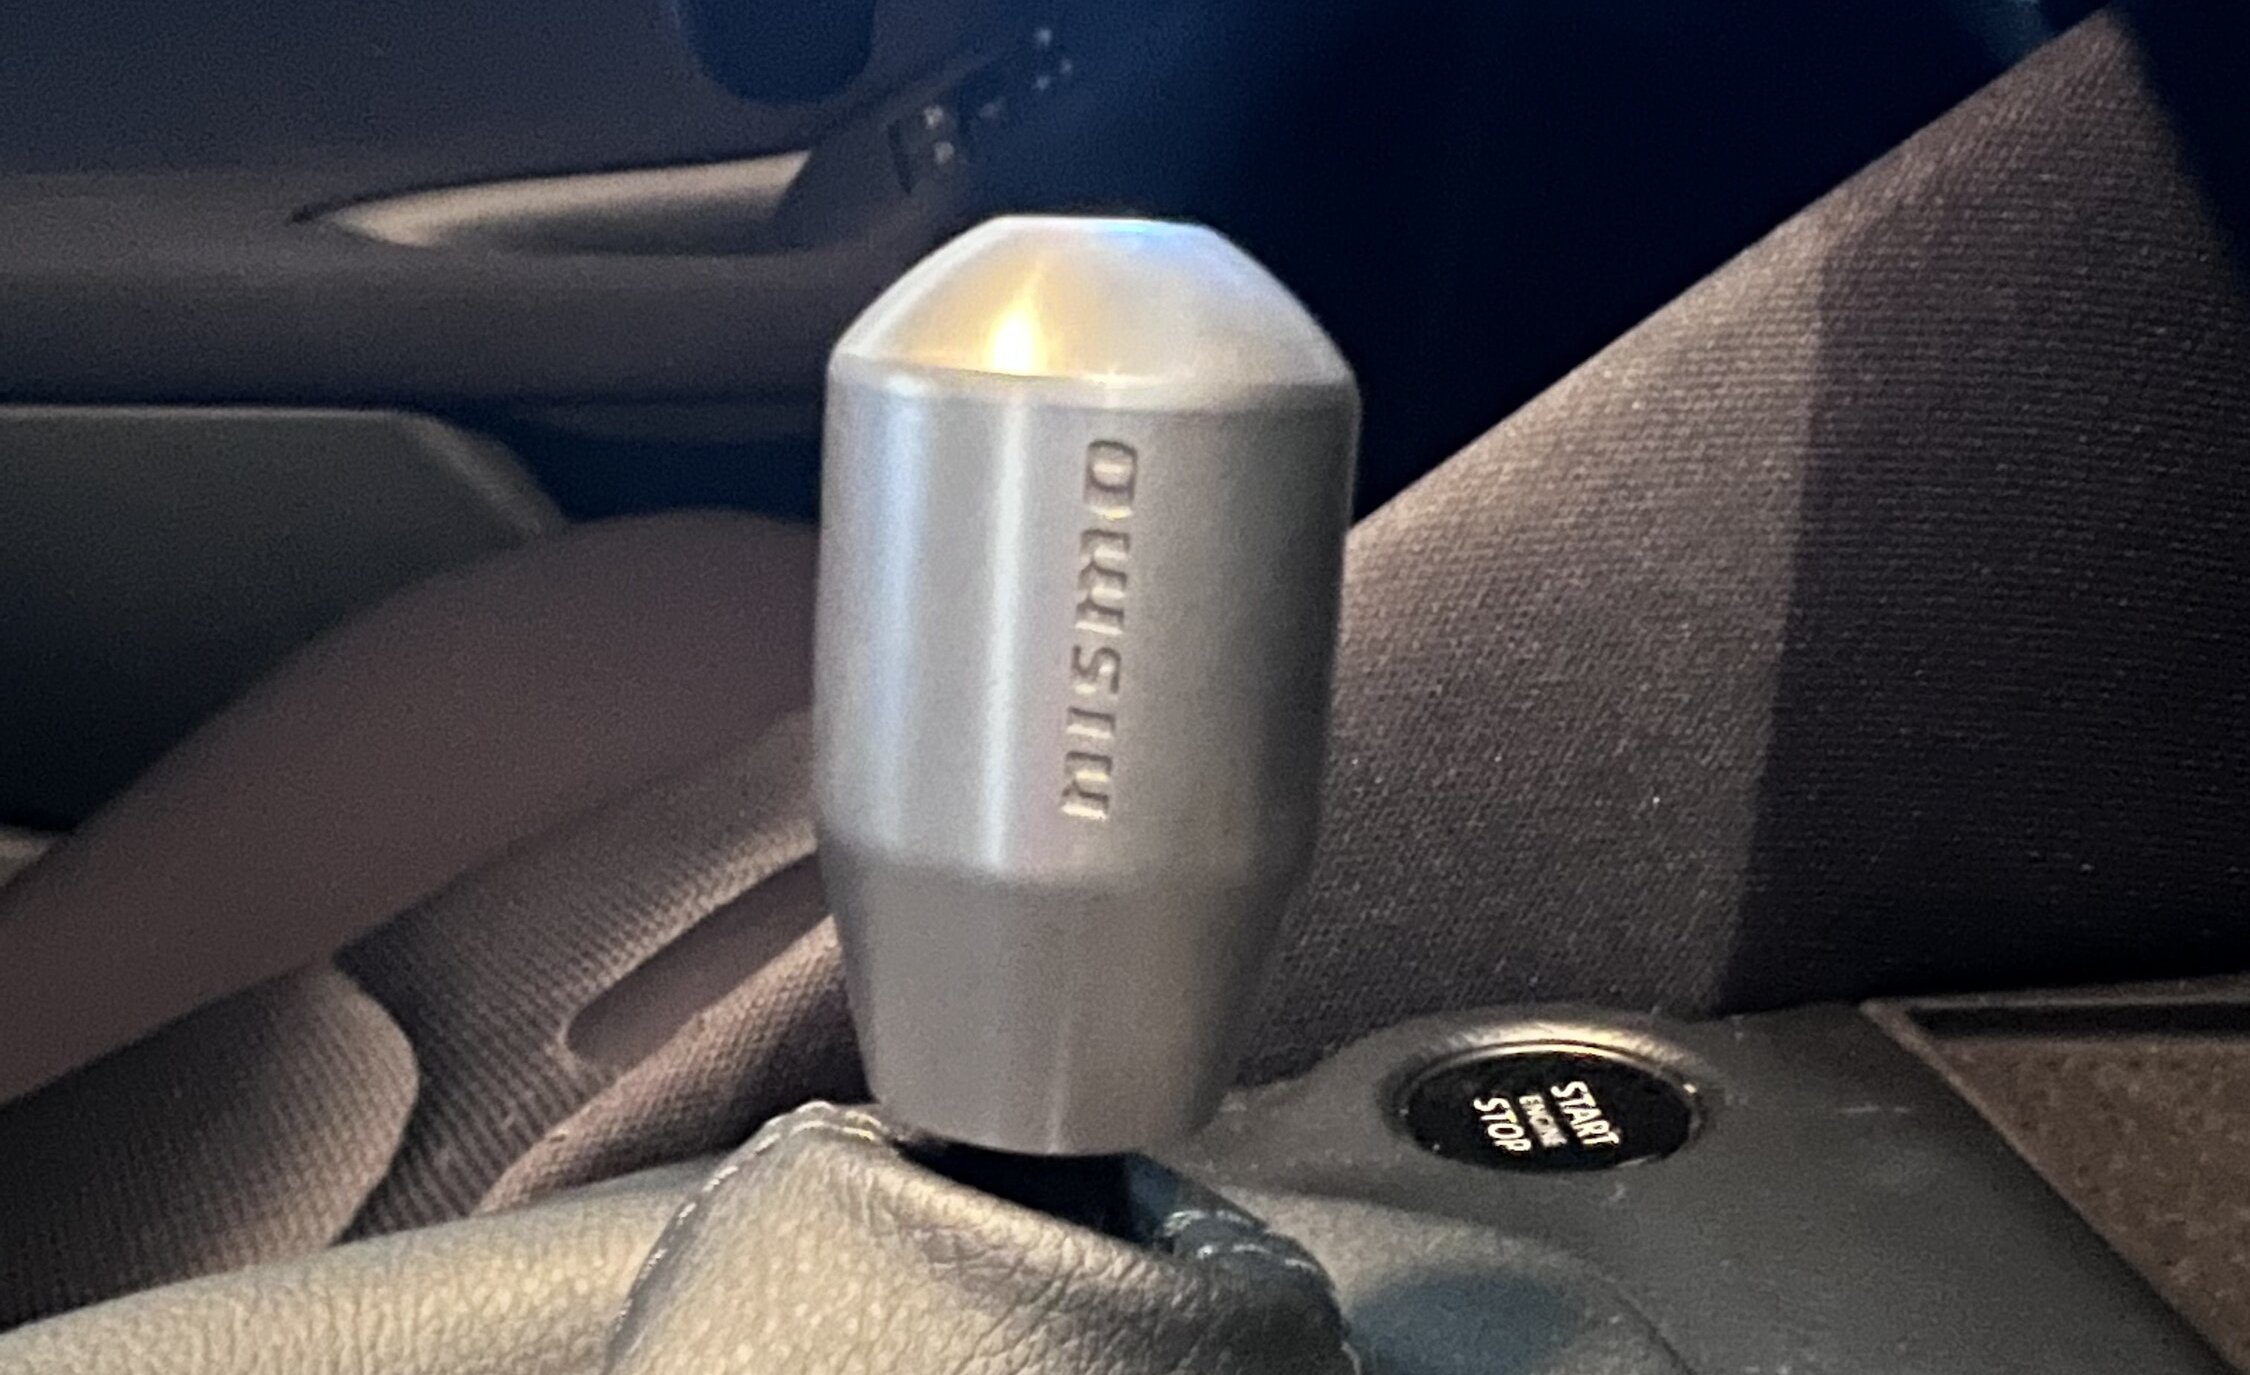 Finally….installed my Nismo GT Titanium gear knob!